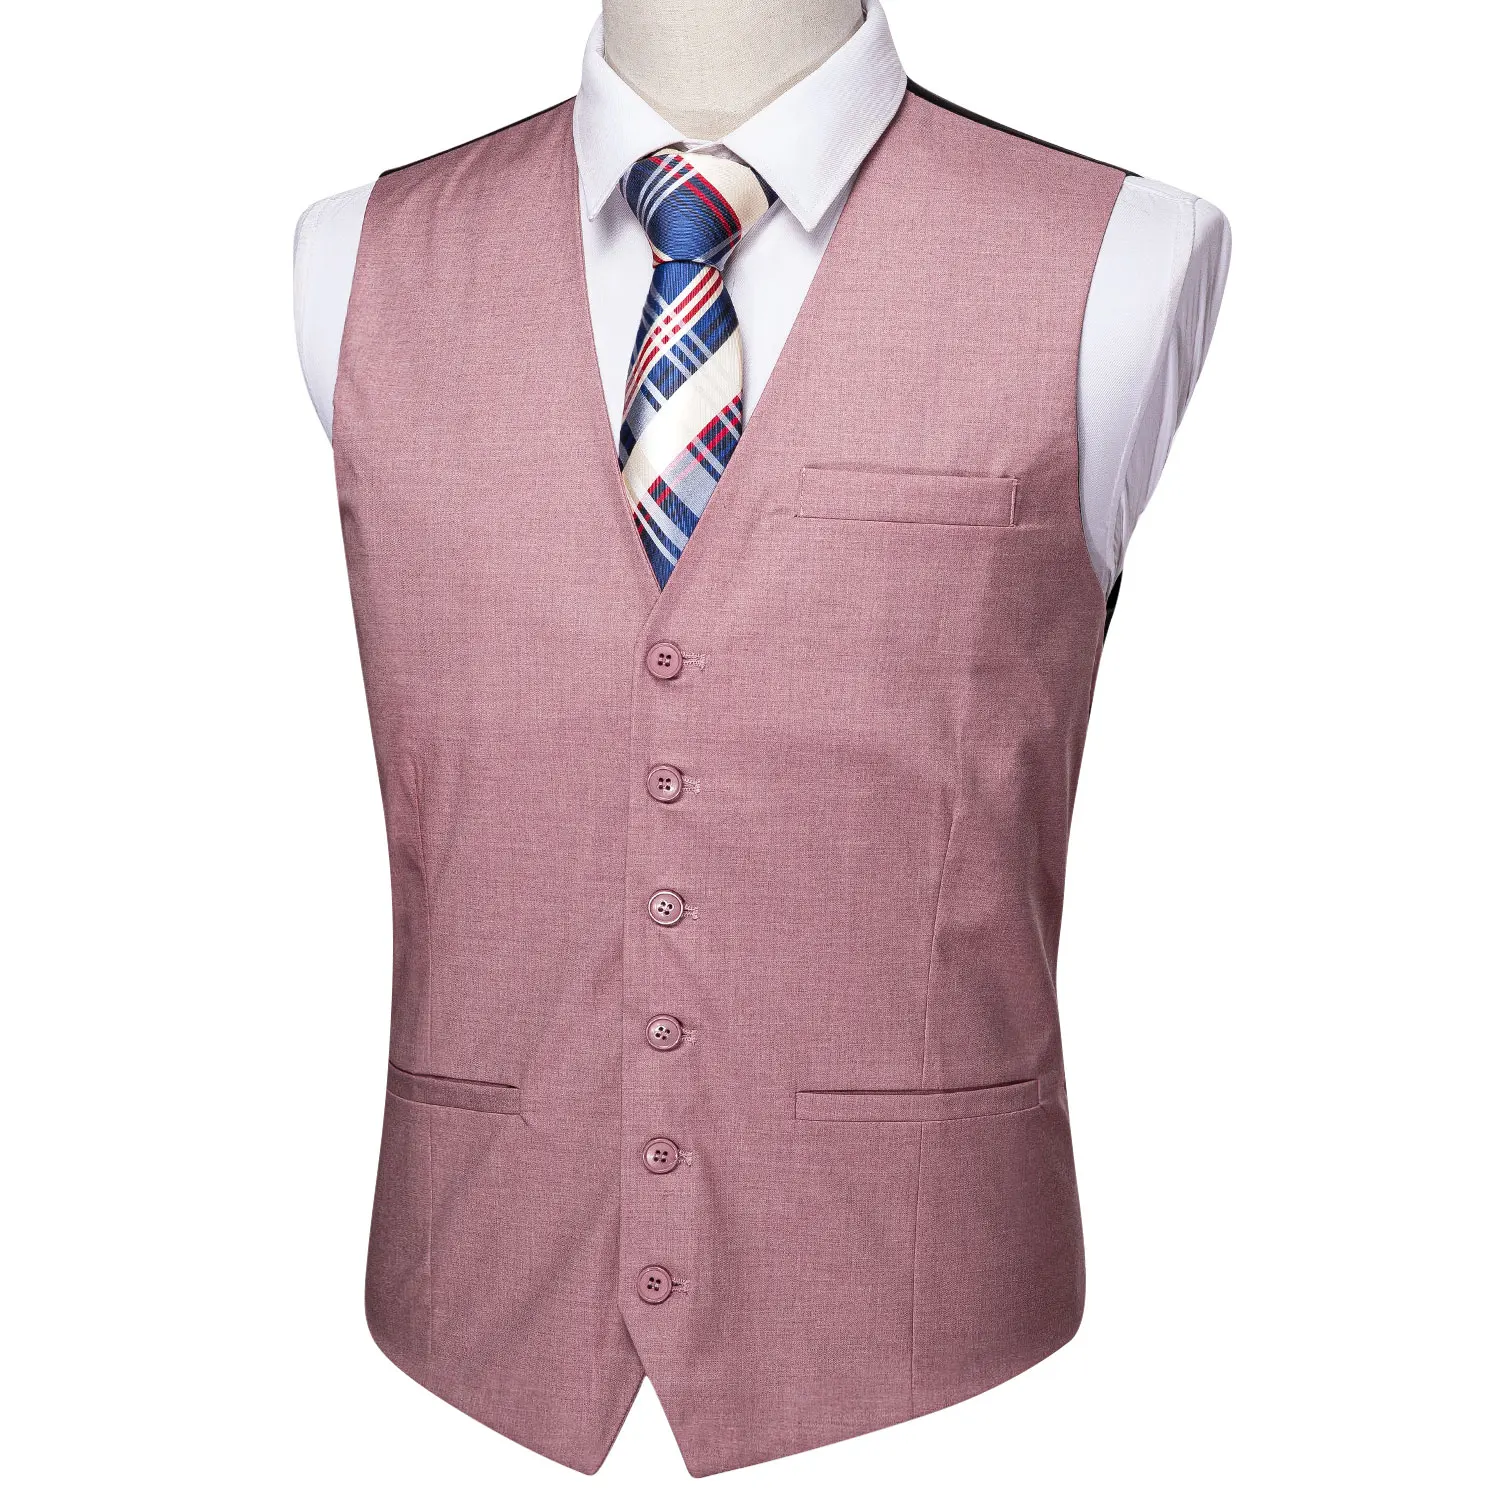 

Barry.Wang Mens Pink Solid Waistcoat Blend Tailored Collar V-neck 3 Pocket Check Suit Vest Tie Set Formal Leisure MD-2306